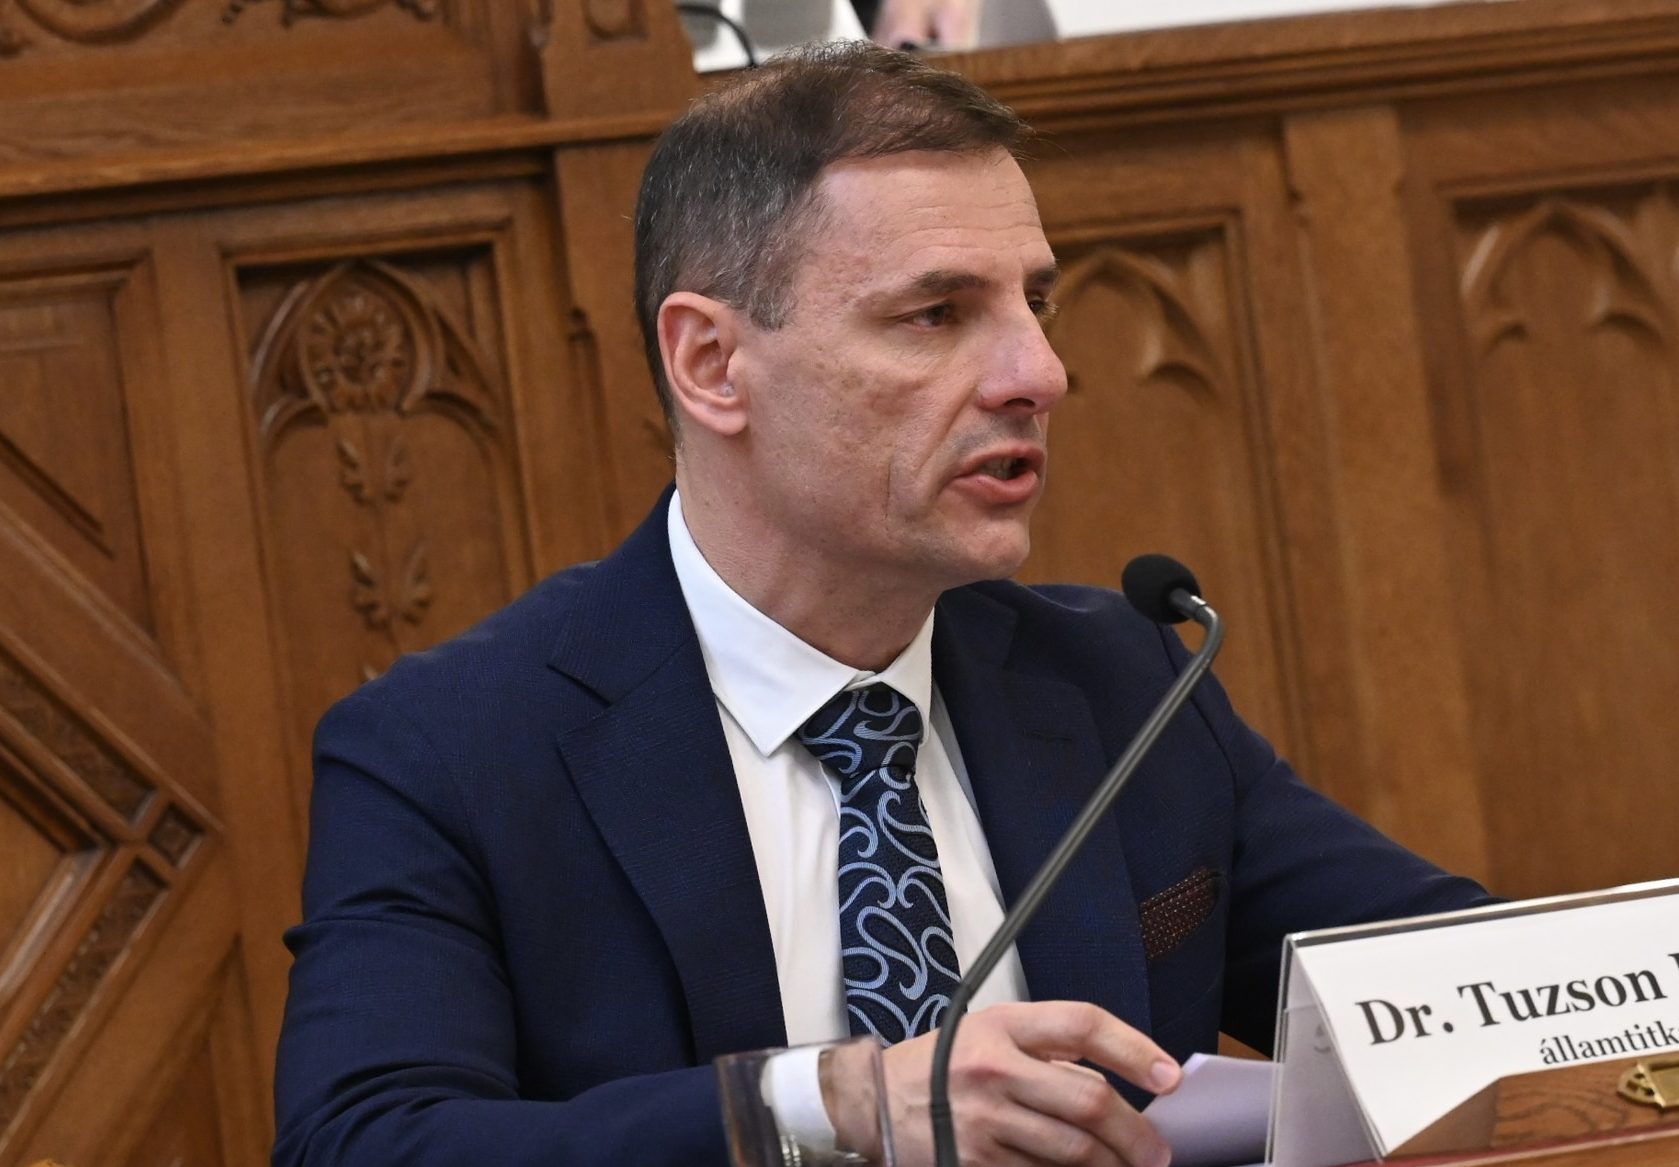 Bence Tuzson soll Ungarns nächster Justizminister werden